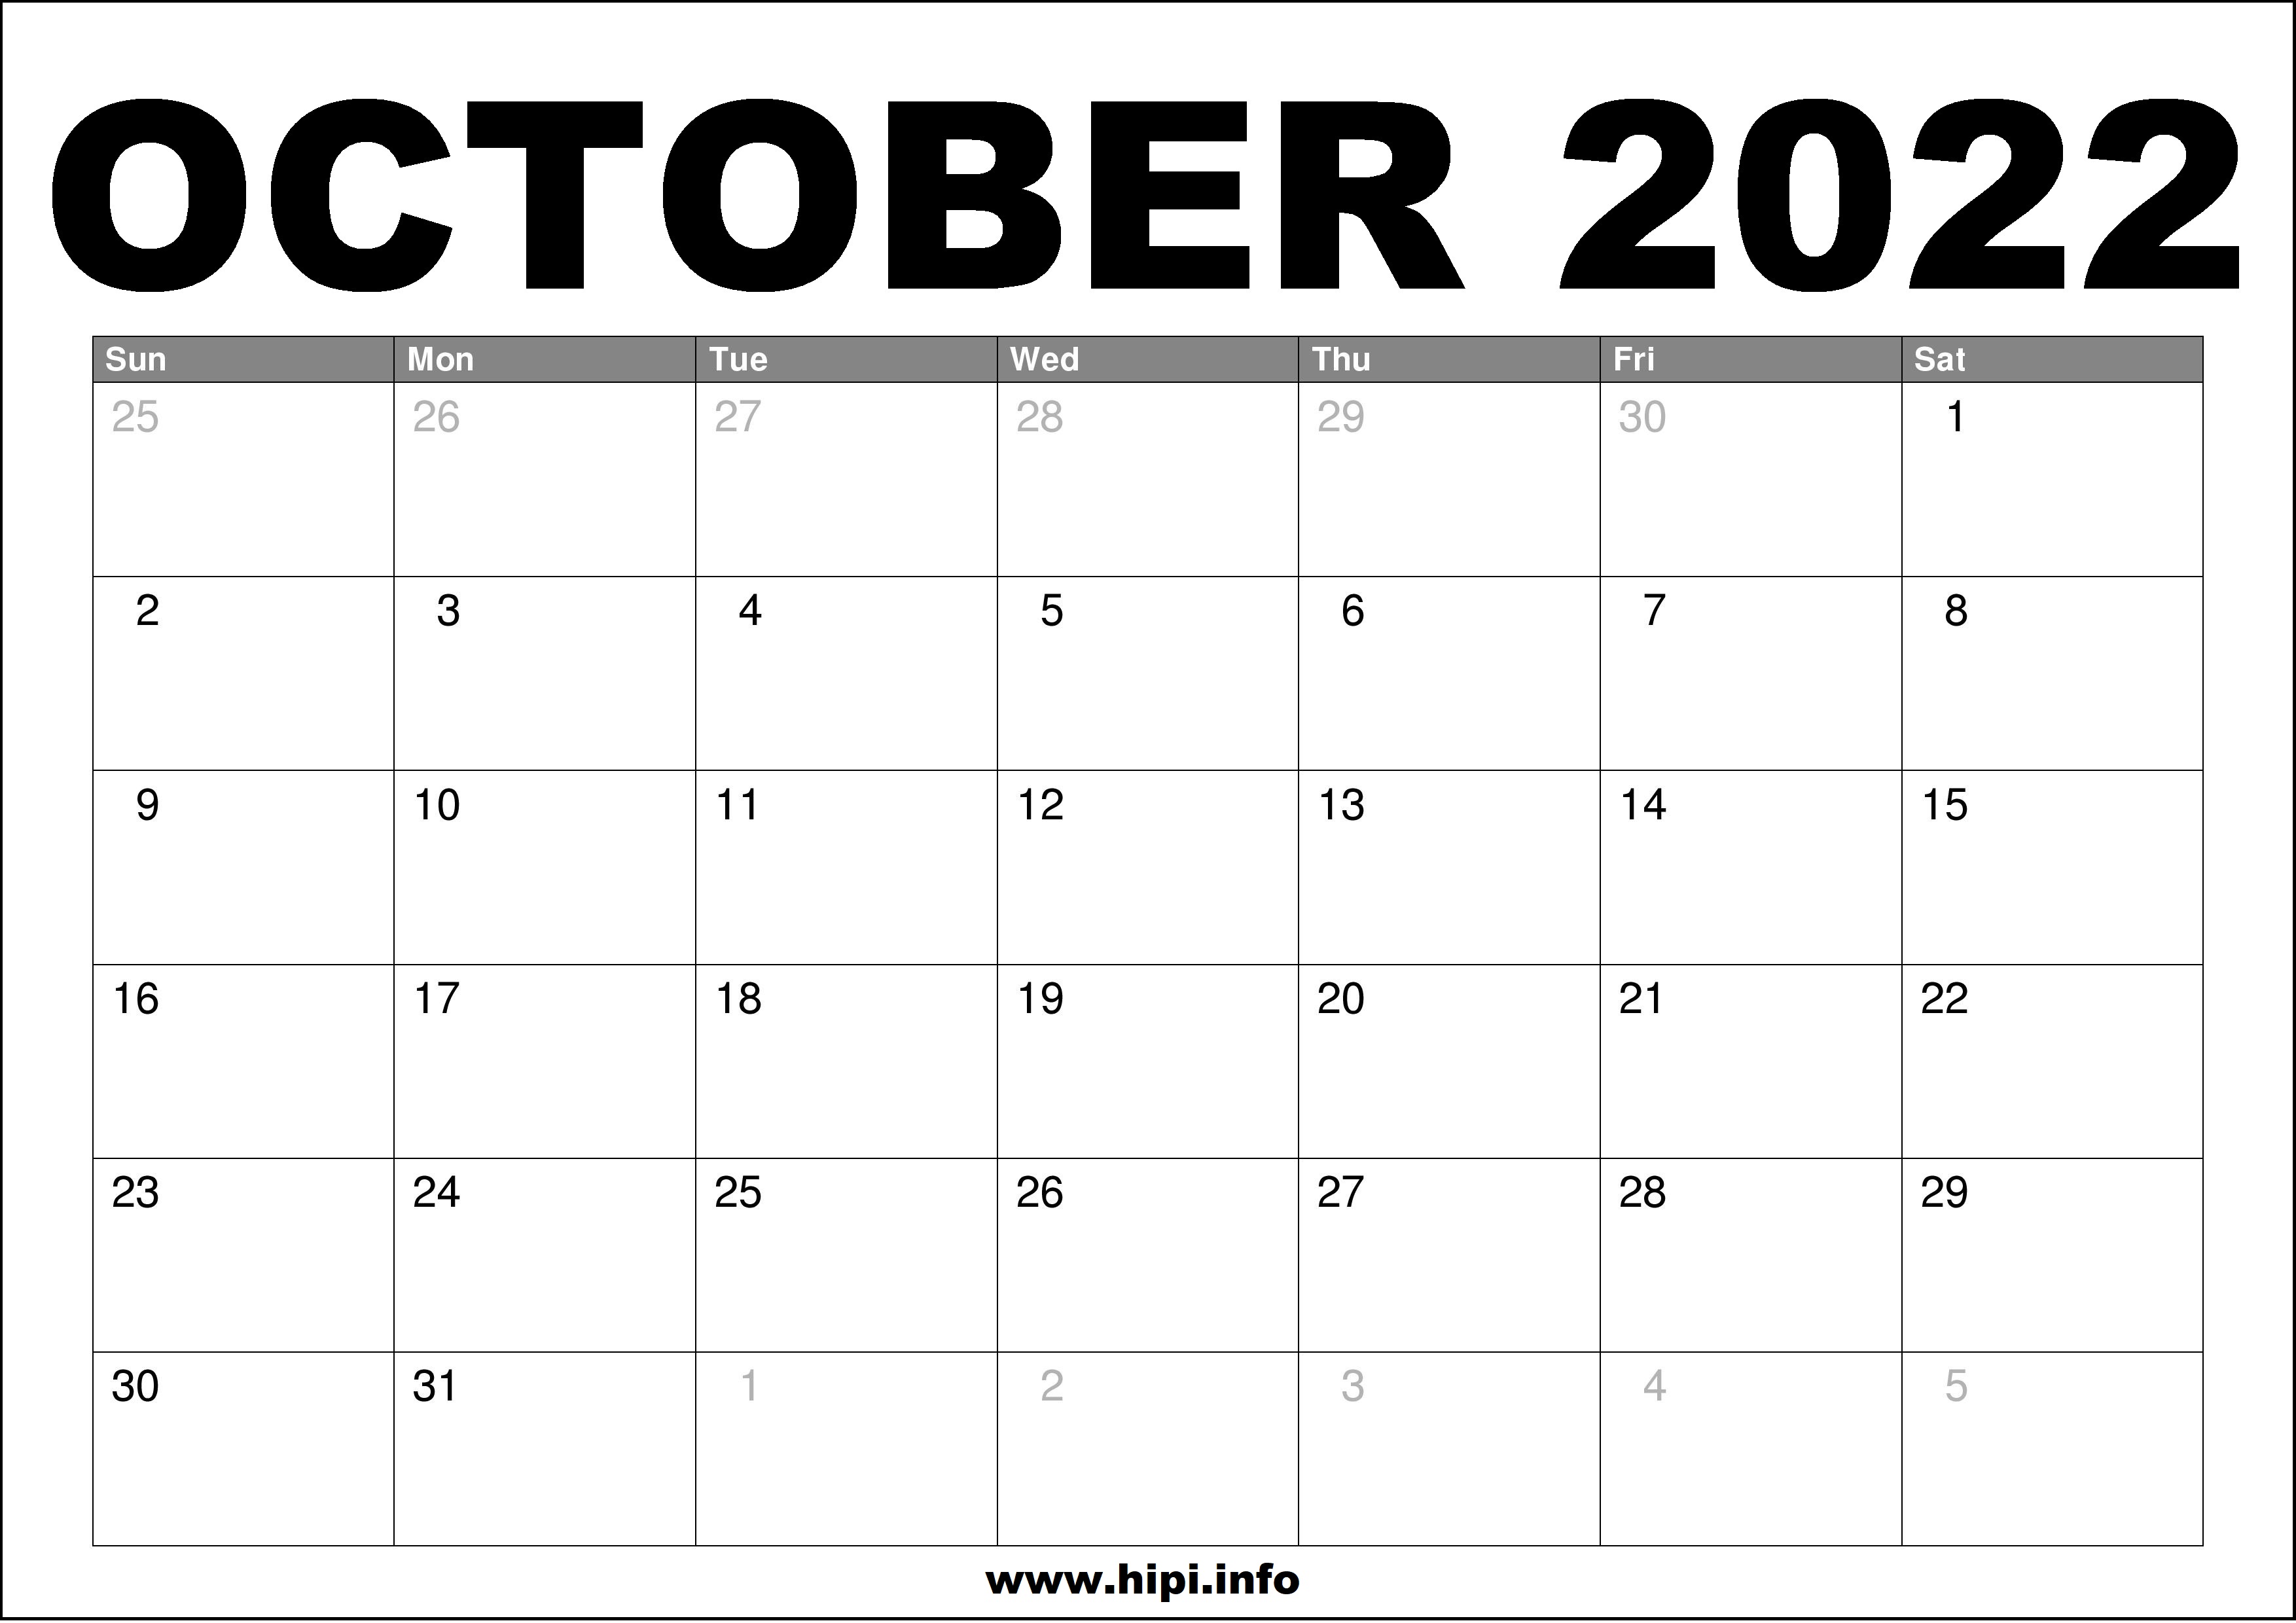 0ctober 2022 Calendar October 2022 Calendar Printable Free - Hipi.info | Calendars Printable Free